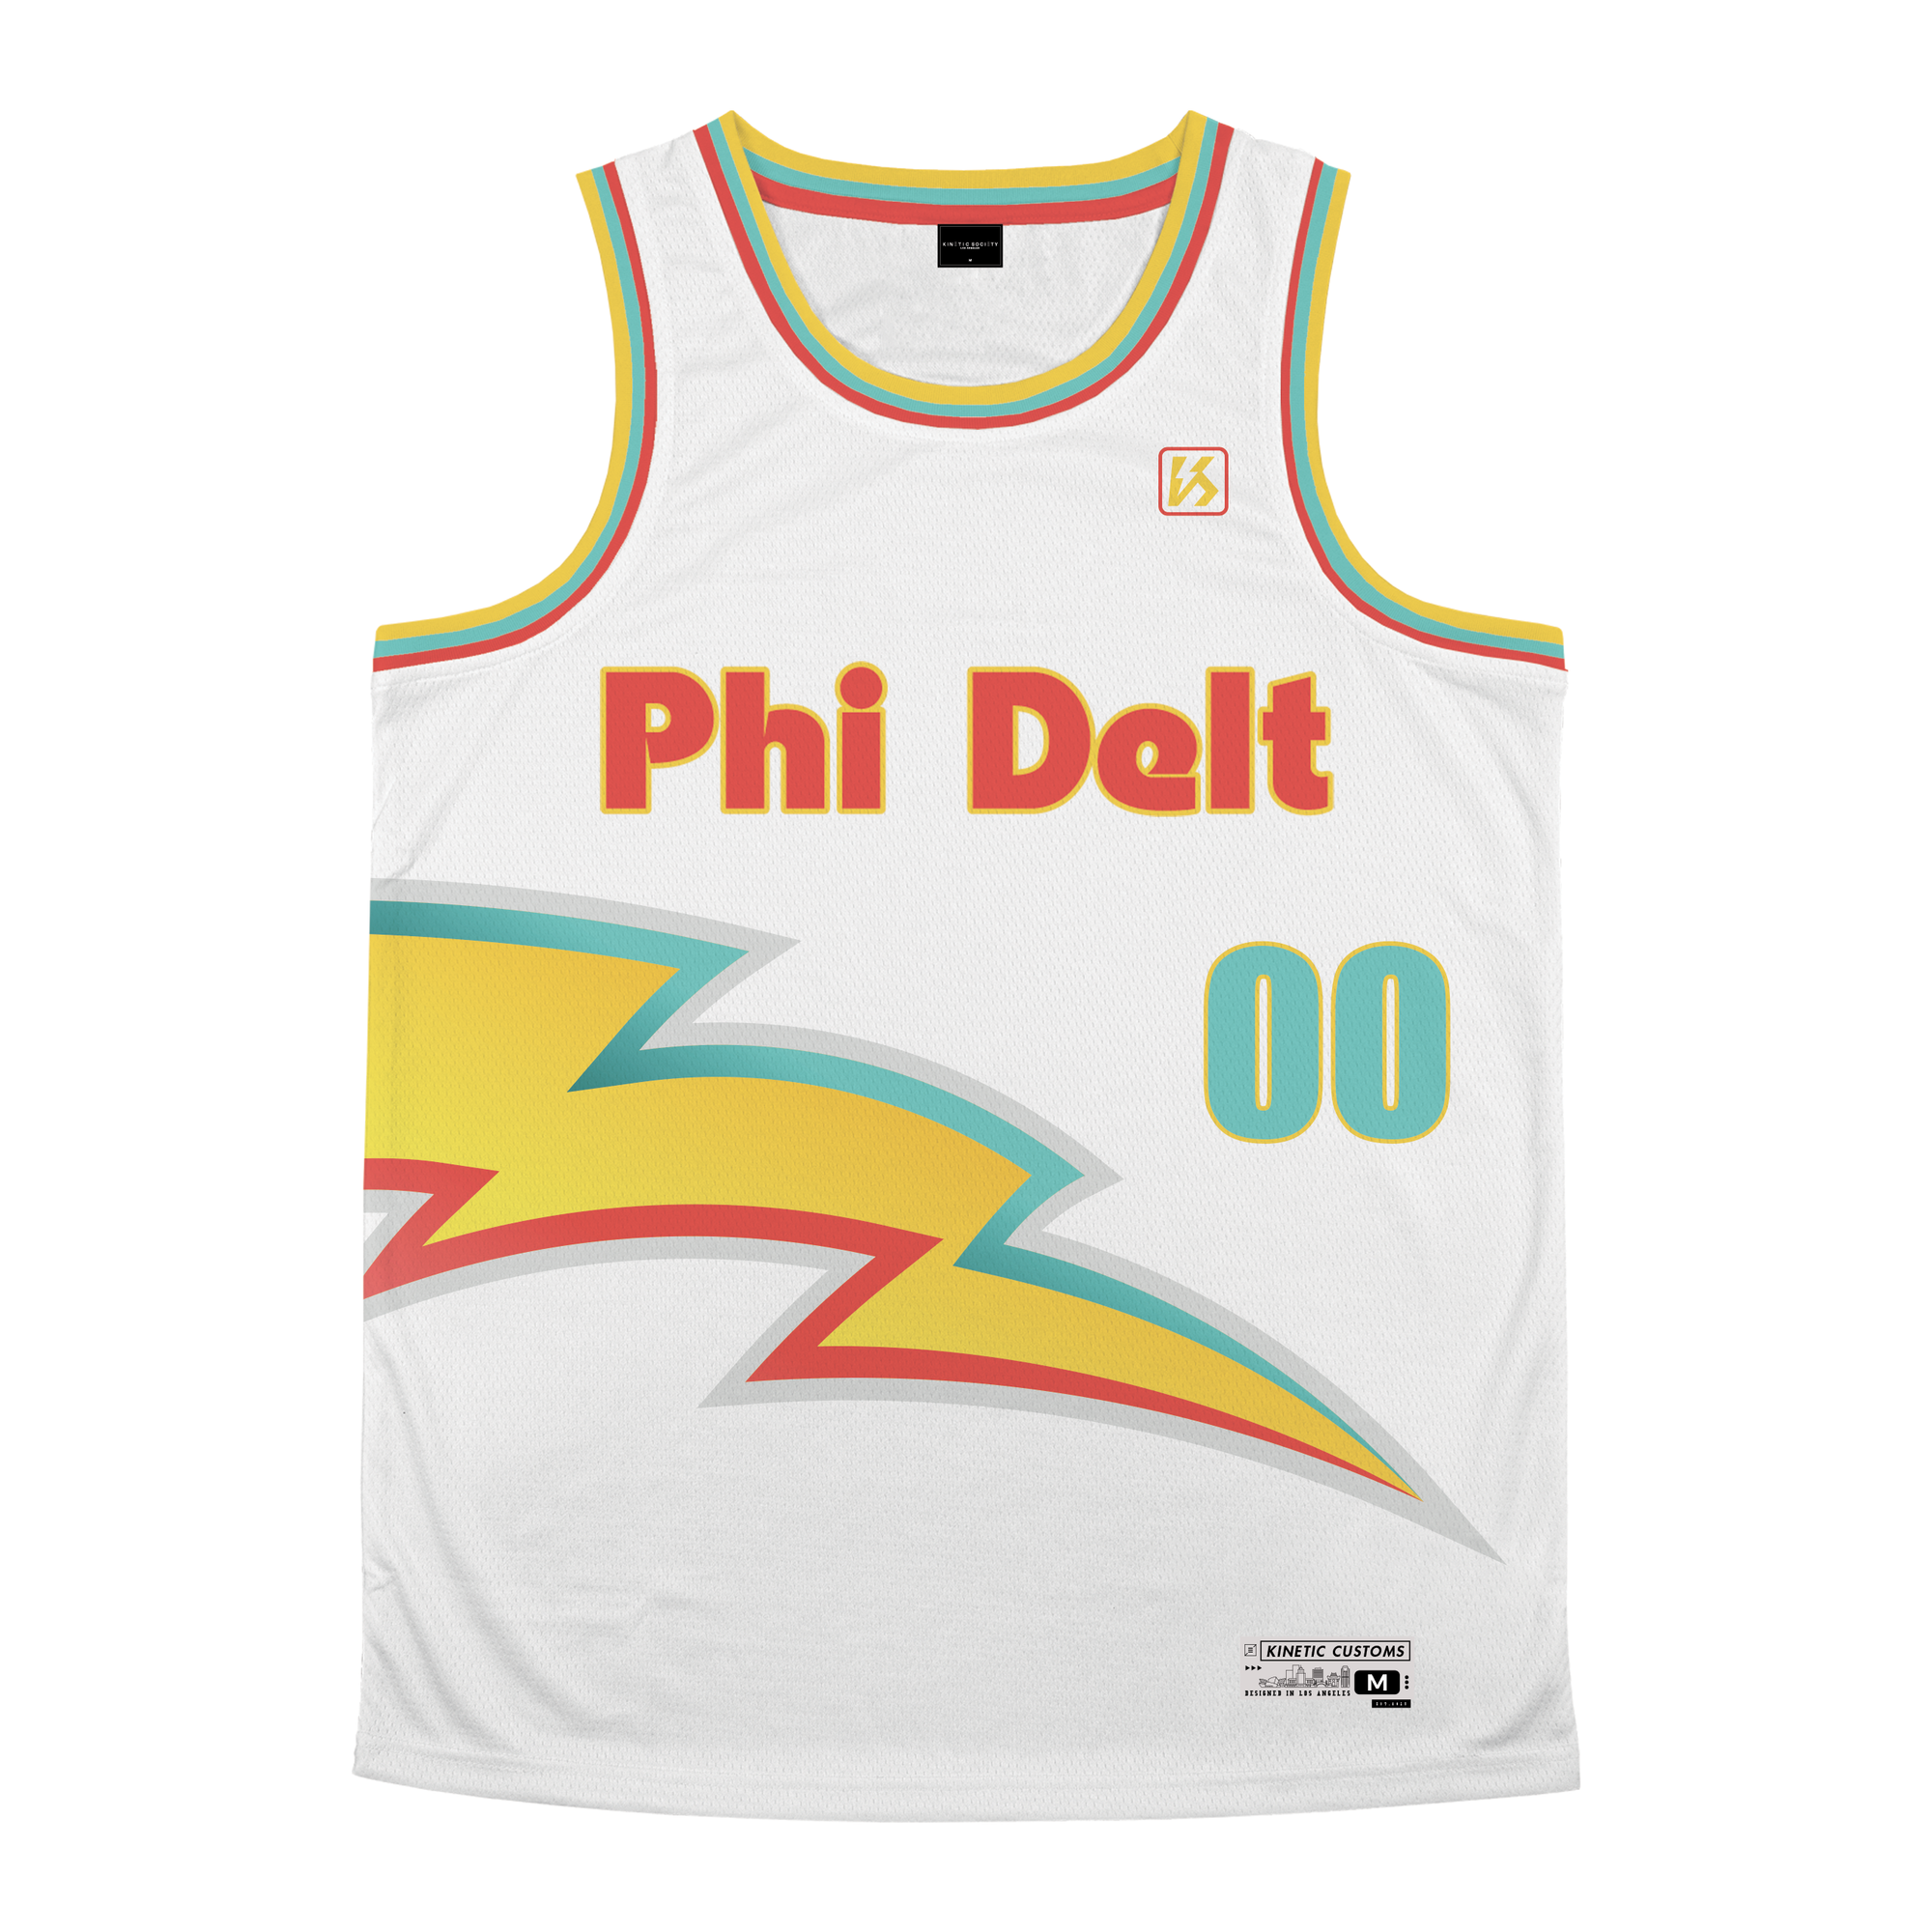 Phi Delta Theta - Bolt Basketball Jersey